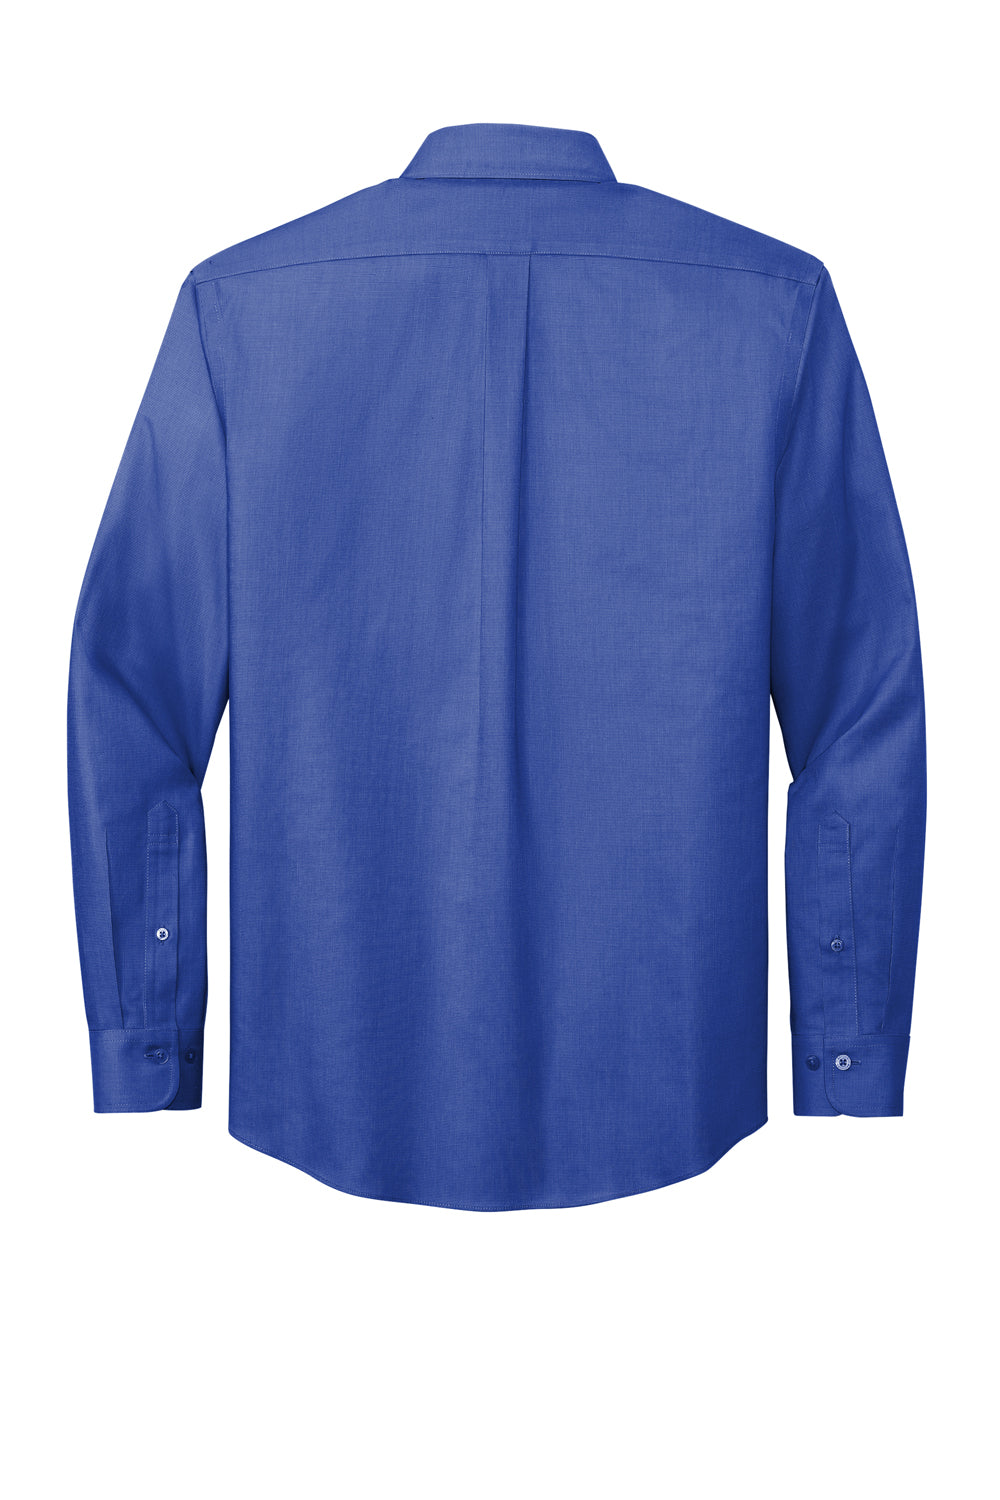 Brooks Brothers Mens Wrinkle Resistant Nailhead Long Sleeve Button Down Shirt w/ Pocket Cobalt Blue Flat Back